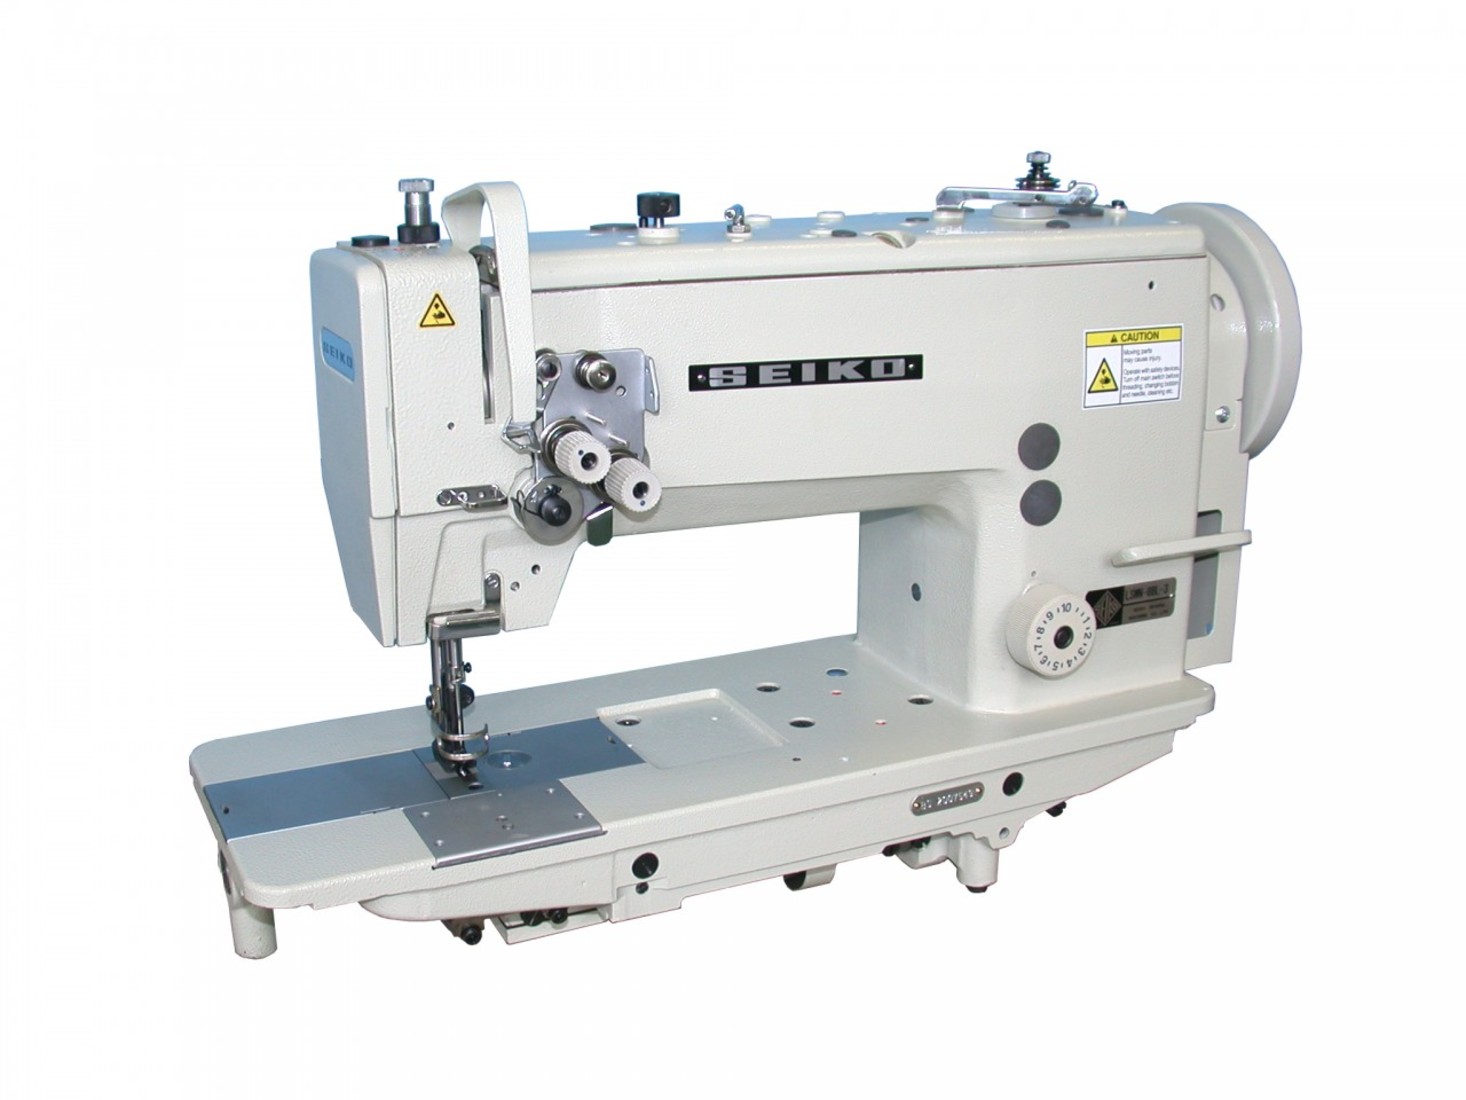 silai machine, seiko lswn walking foot industrial sewing machine #25987